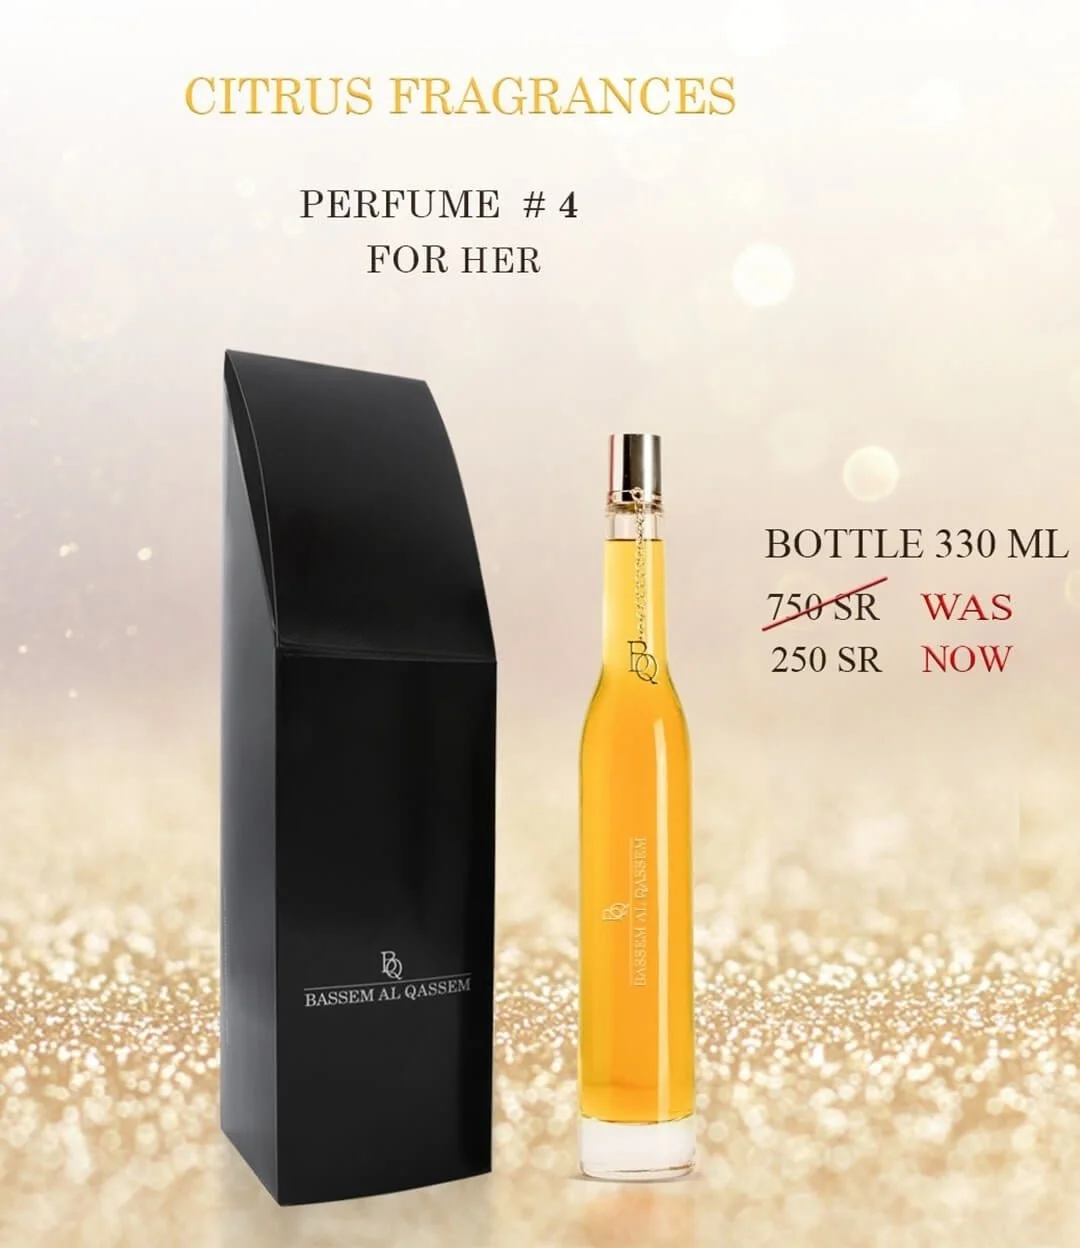 Perfume #4 Citrus Fragrance for Her by Bassem Al Qassem 